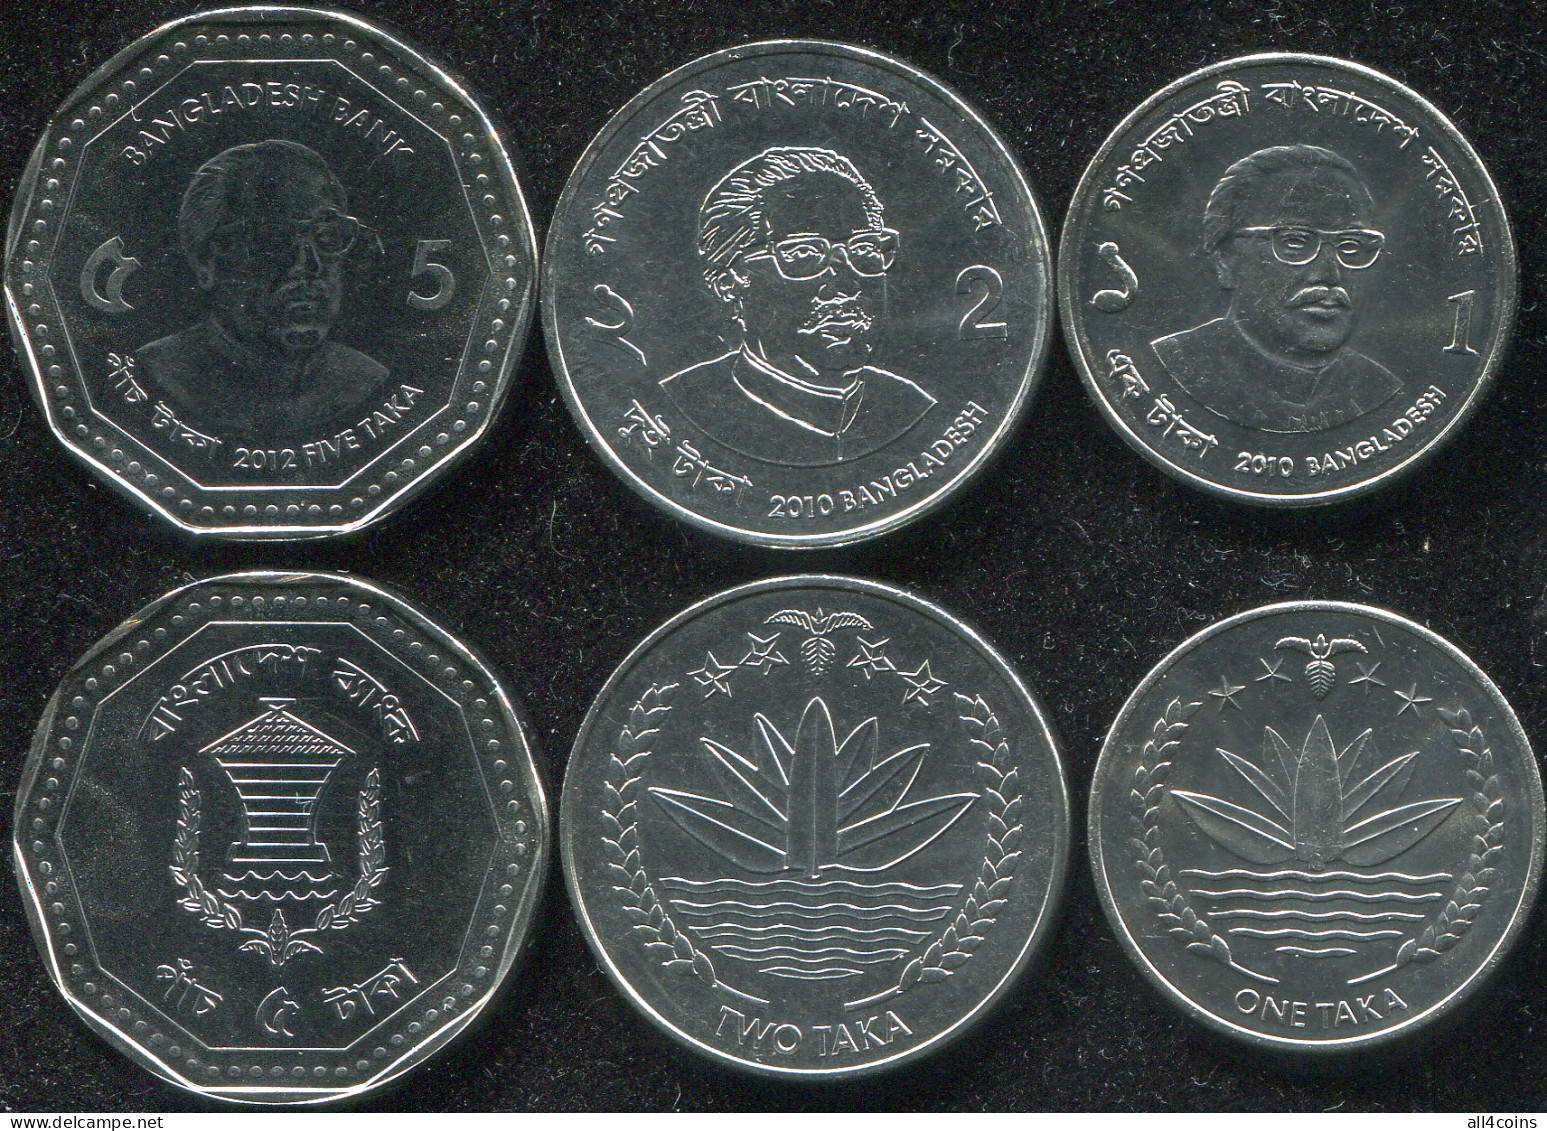 Bangladesh Coins Set #5. 2010-2012 (3 Coins. AUnc-Unc) - Bangladesh